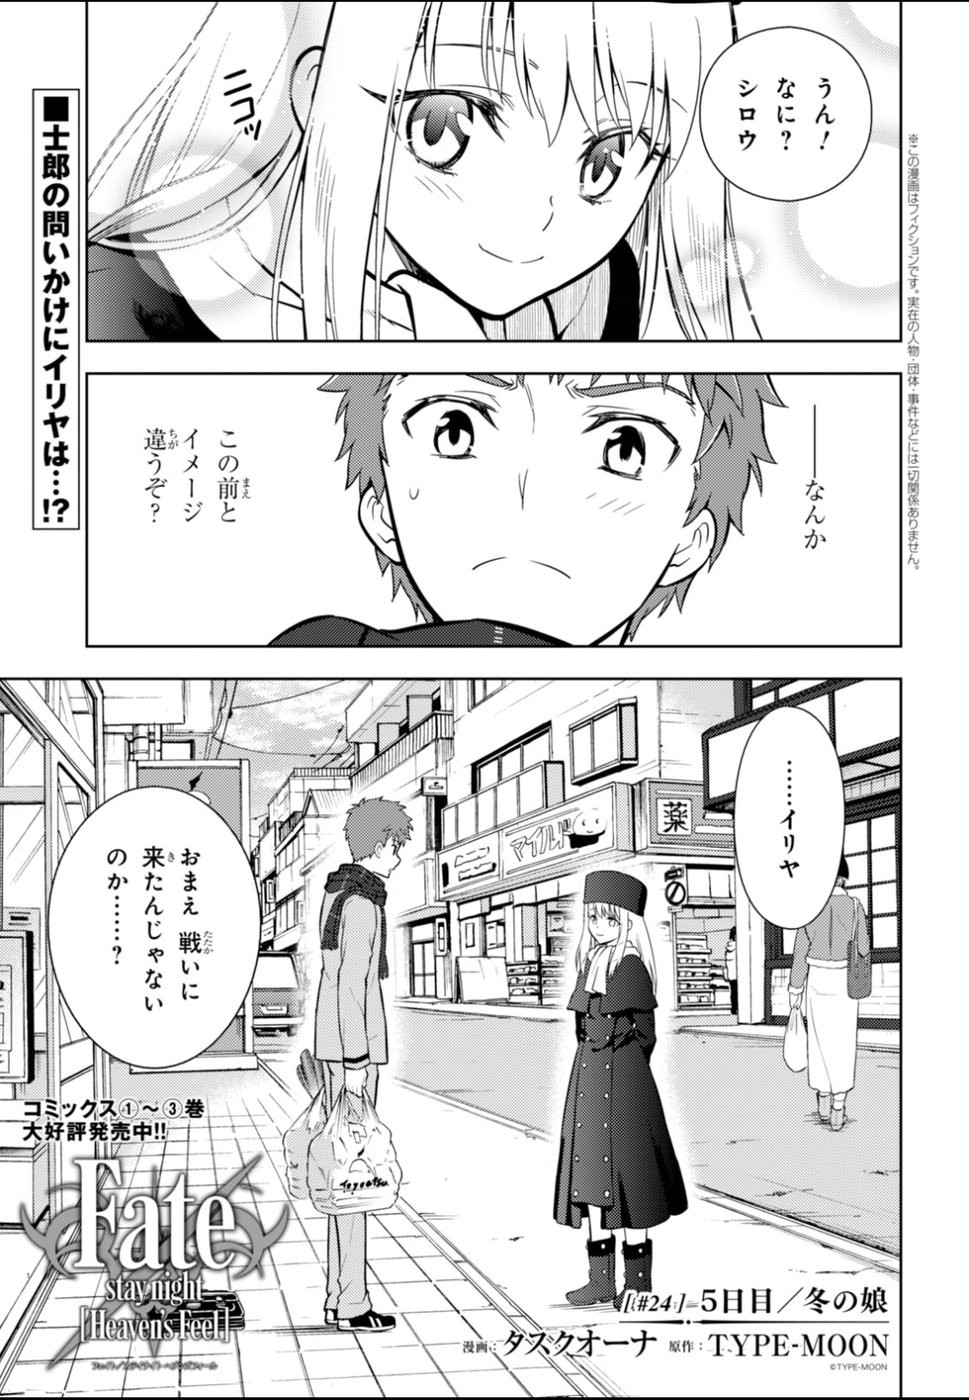 Fate Stay Night Heaven S Feel Chapter 24 Page 1 Raw Sen Manga